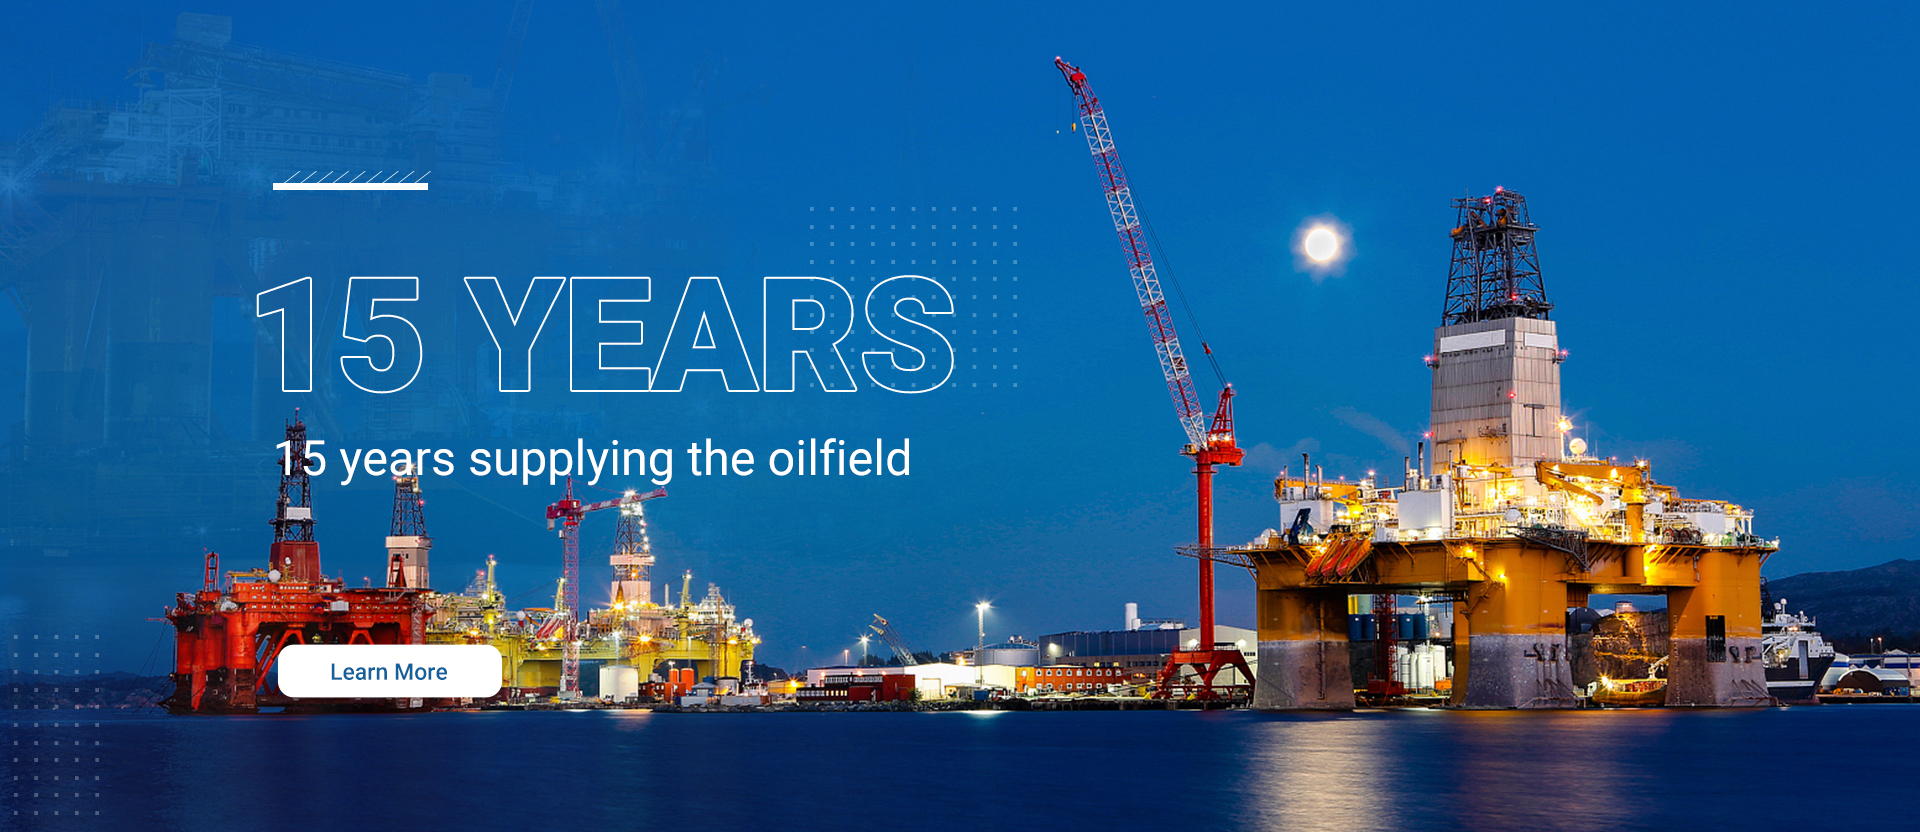 15 years supplying the oilfield